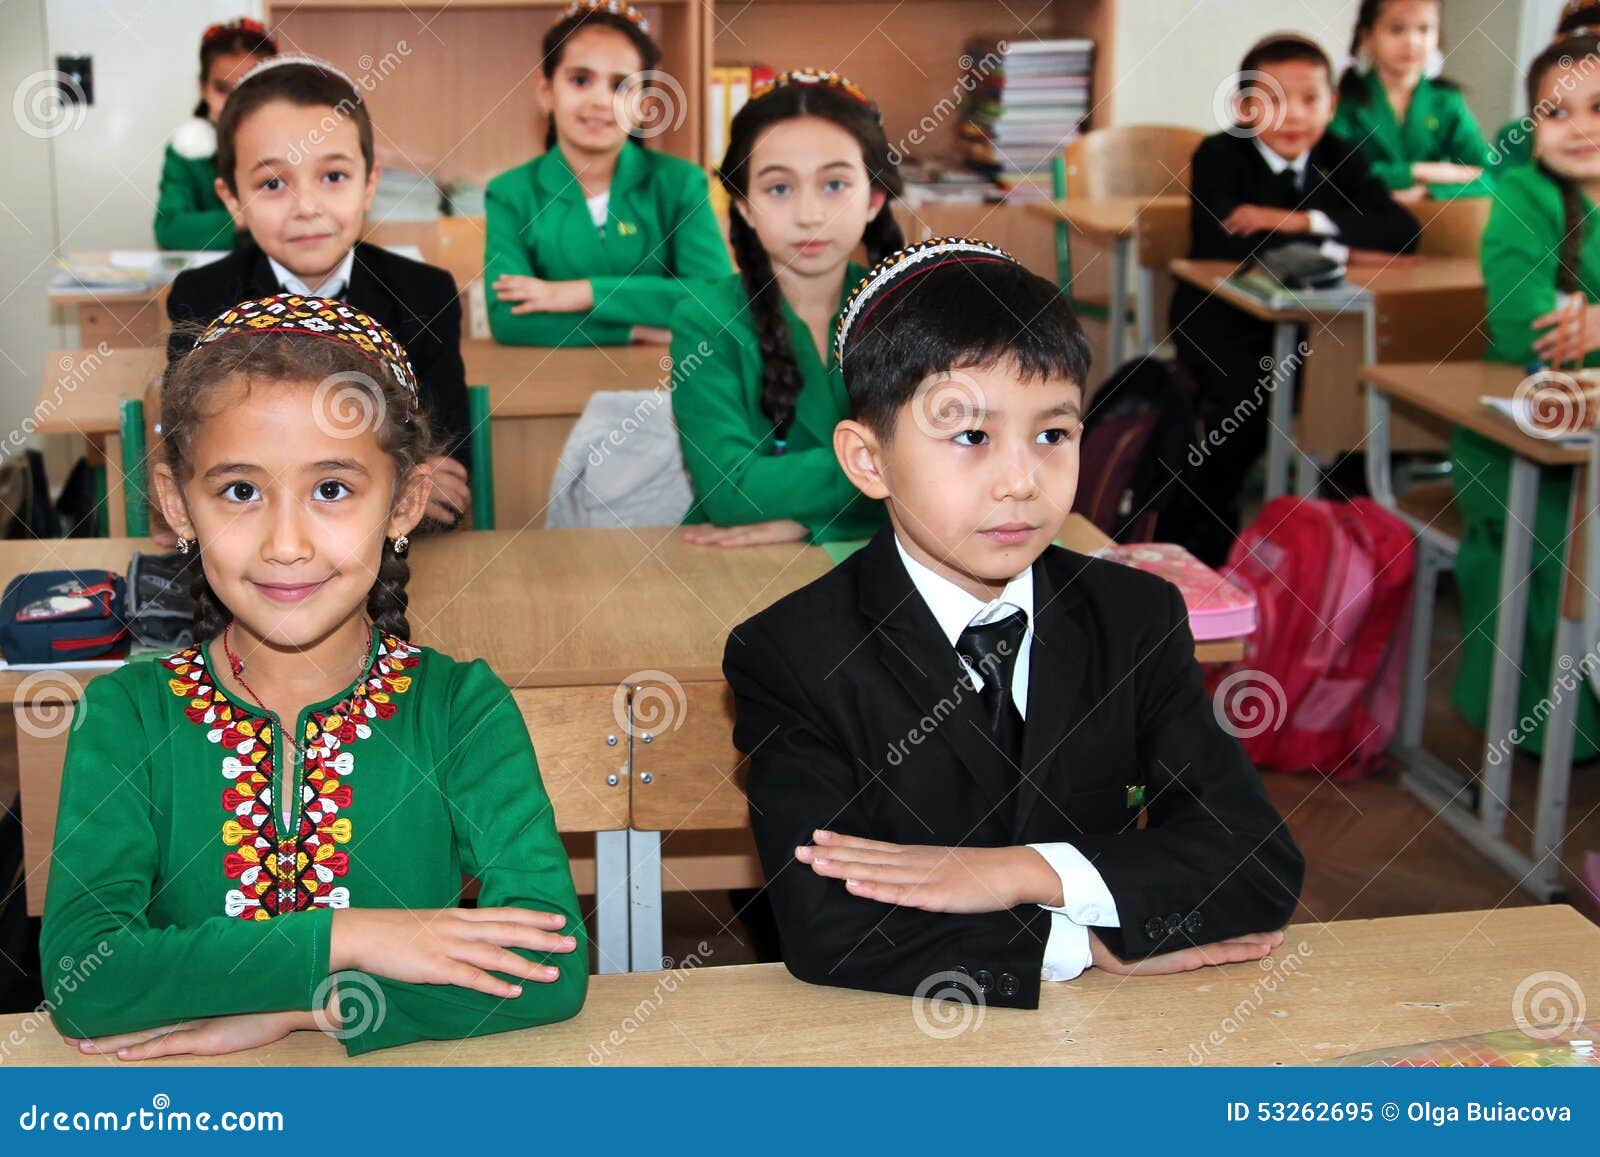 ashgabad-turkmenistan-november-group-students-lesson-classroom-schools-annually-trains-53262695.jpg